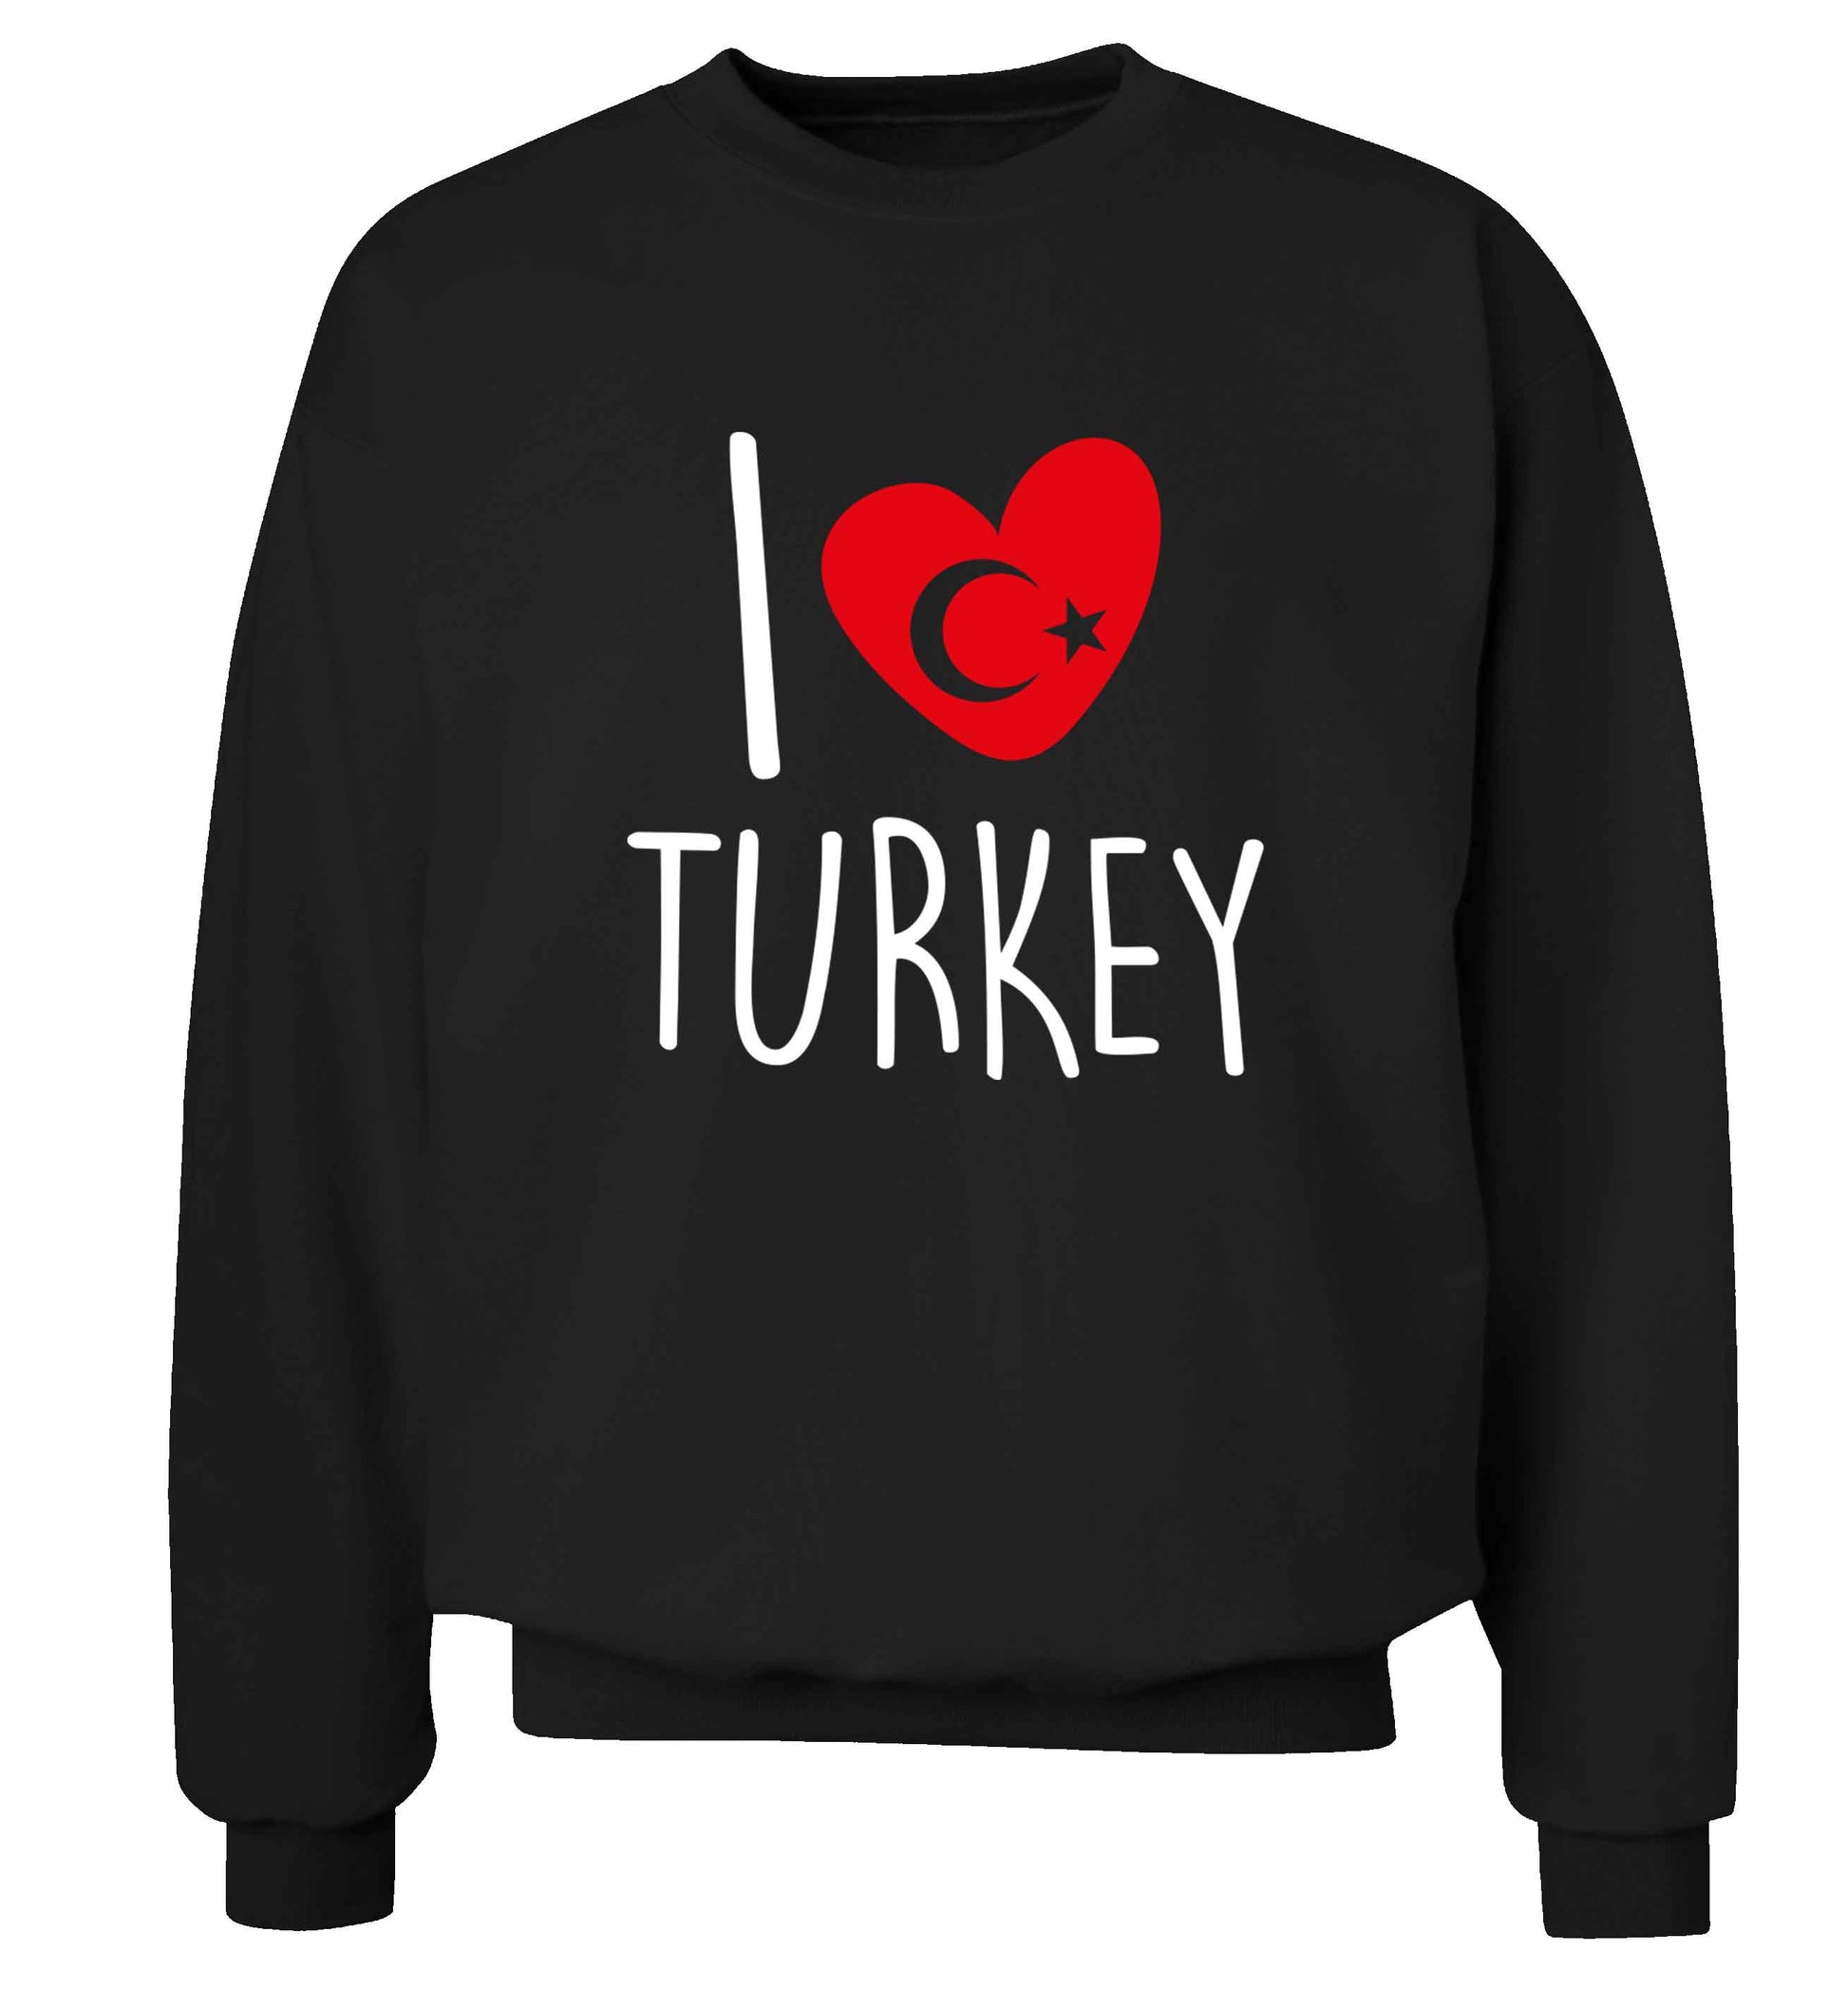 I love Turkey Adult's unisex black Sweater 2XL